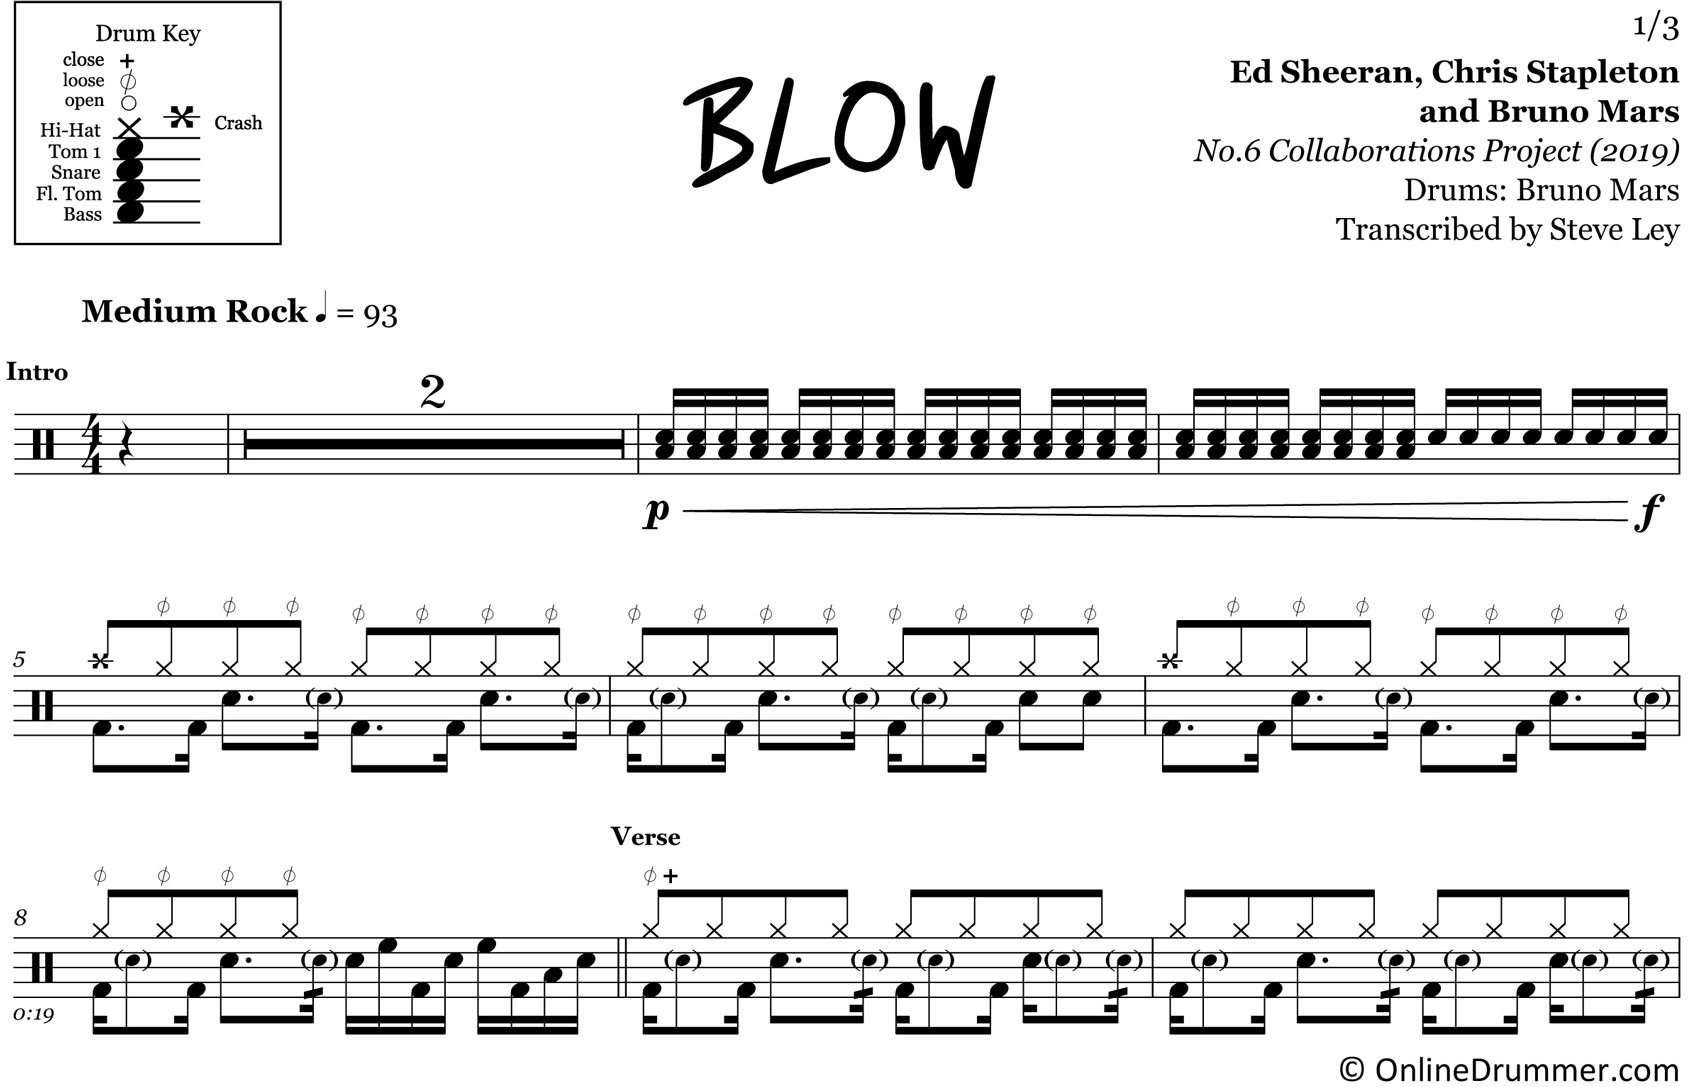 Blow - Ed Sheeran, Chris Stapleton and Bruno Mars - Drum Sheet Music